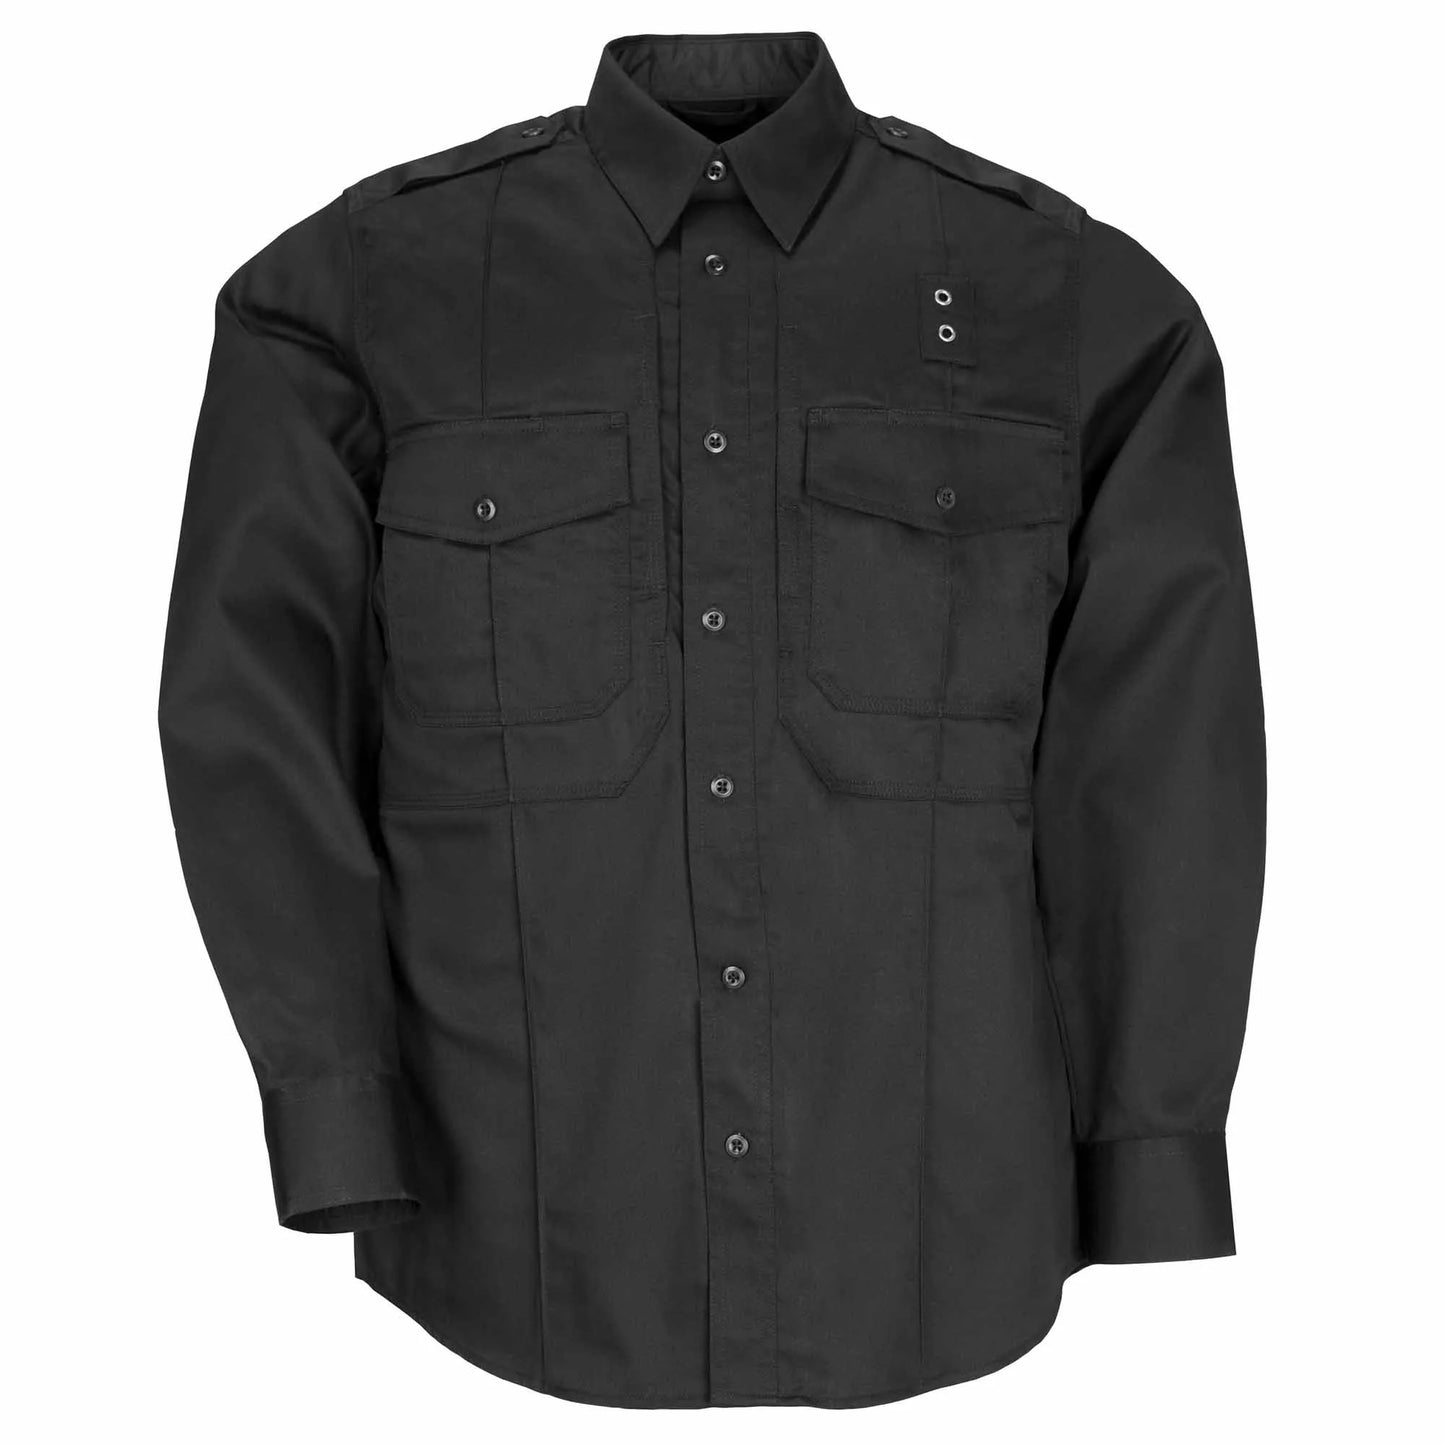 5.11 Tactical TWILL PDU Class B Long Sleeve Shirt